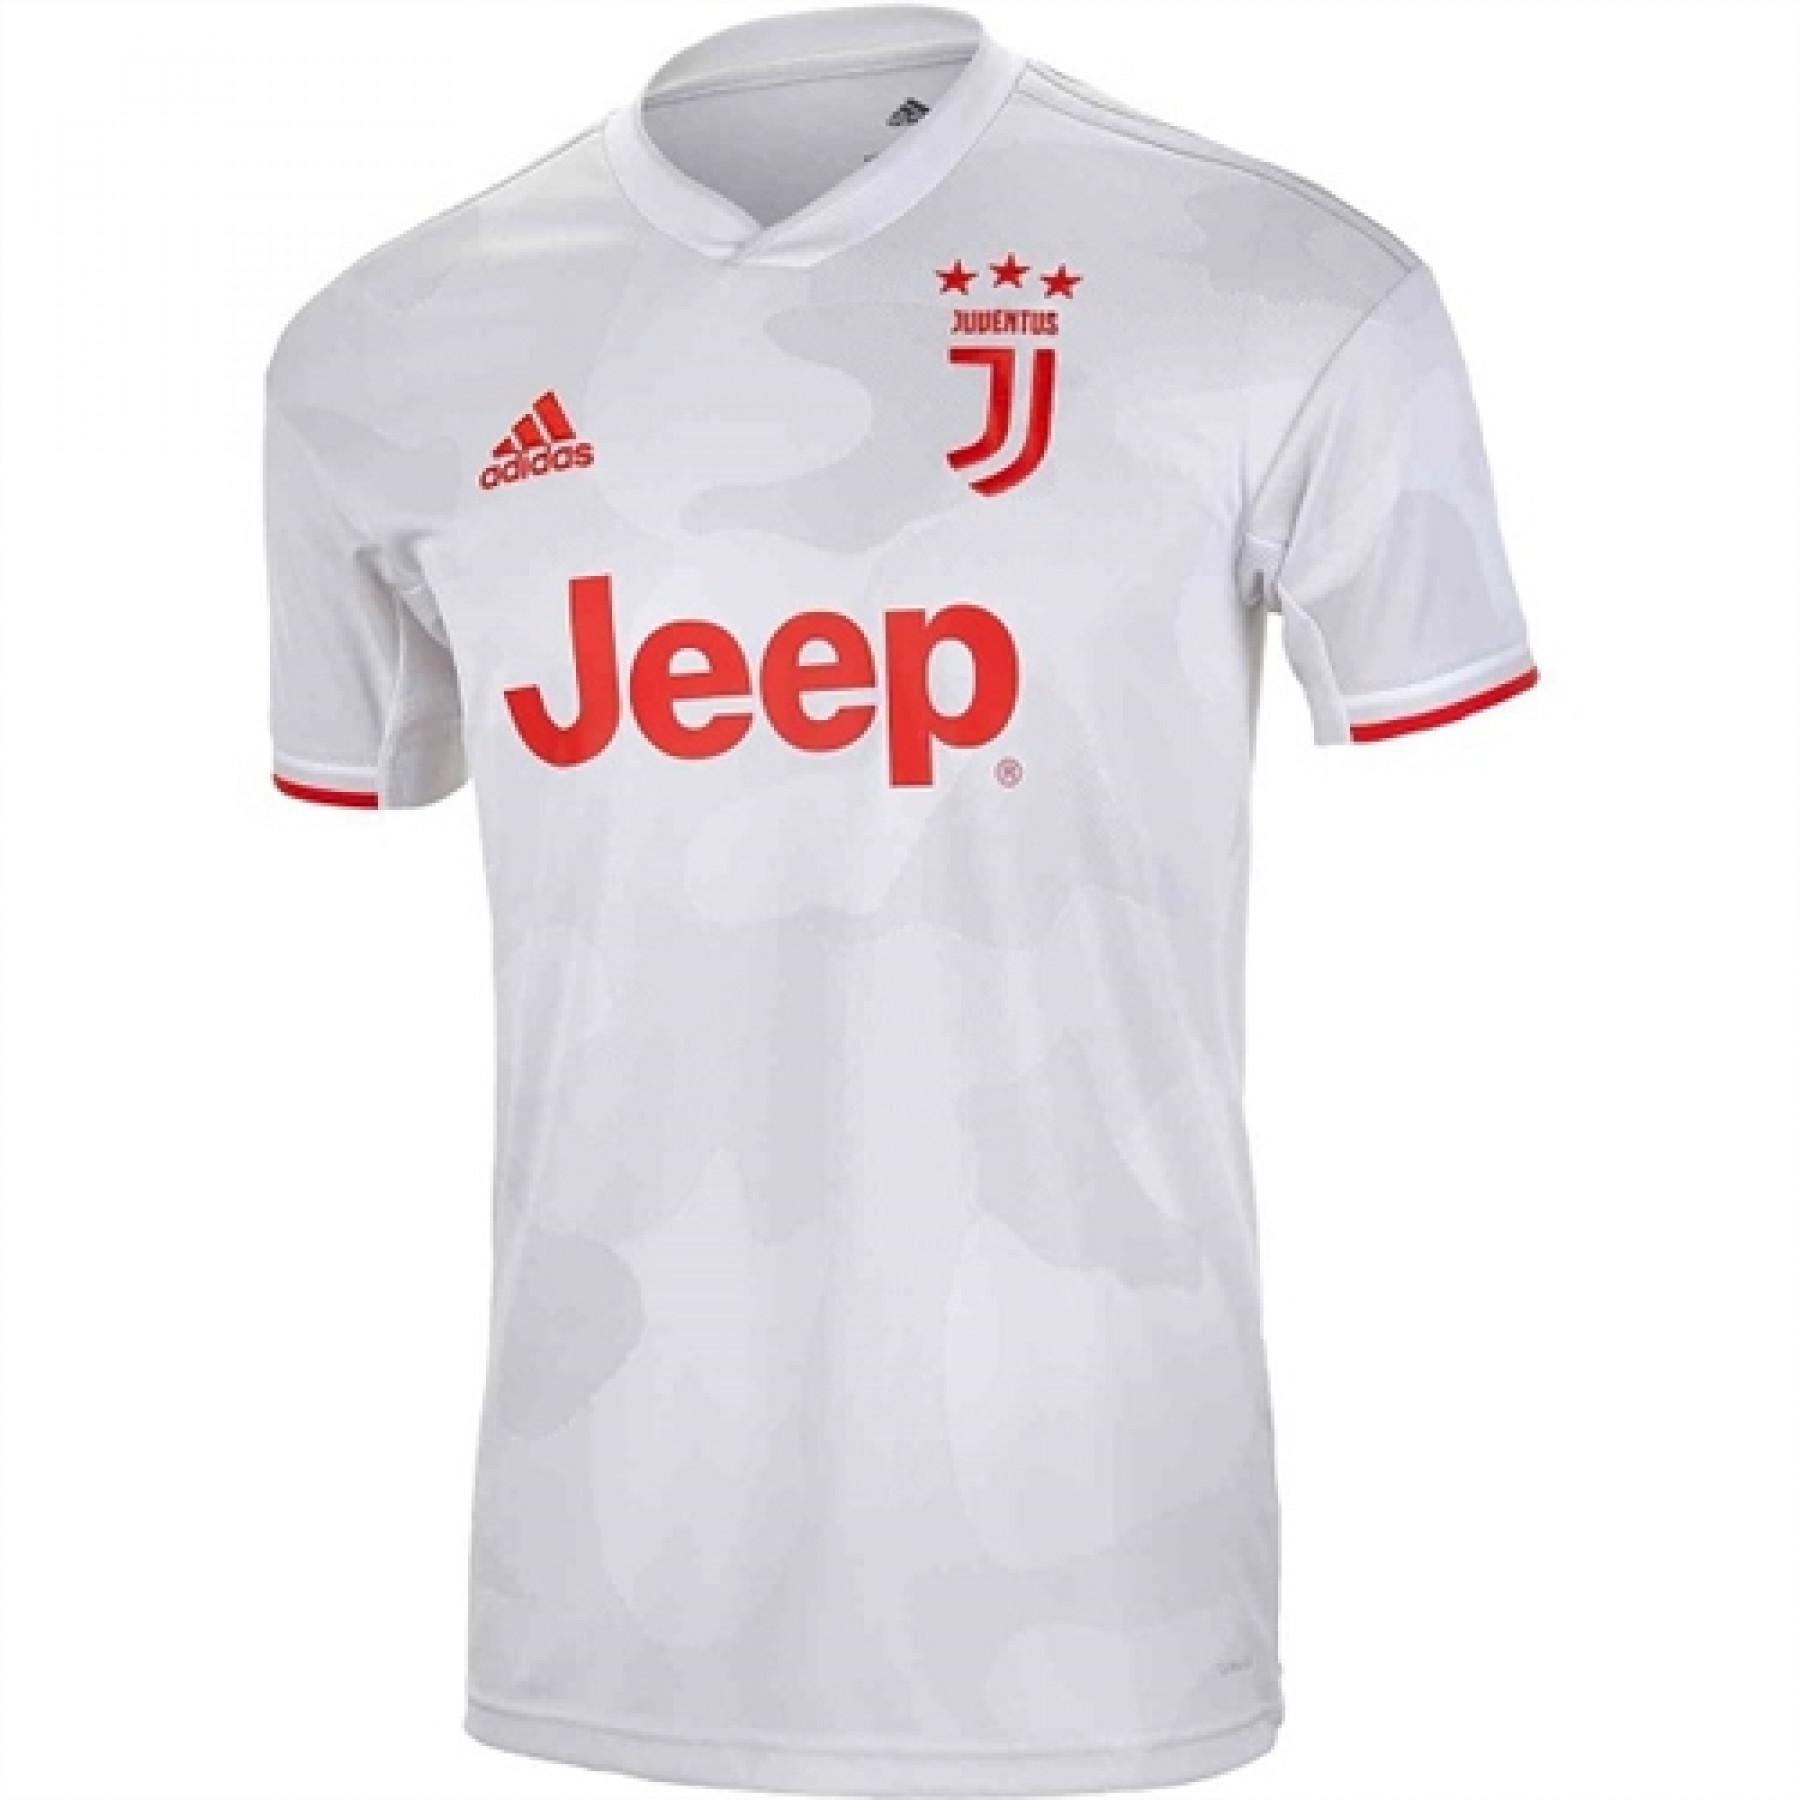 Camiseta segunda equipación infantil Juventus Turin 2019/20